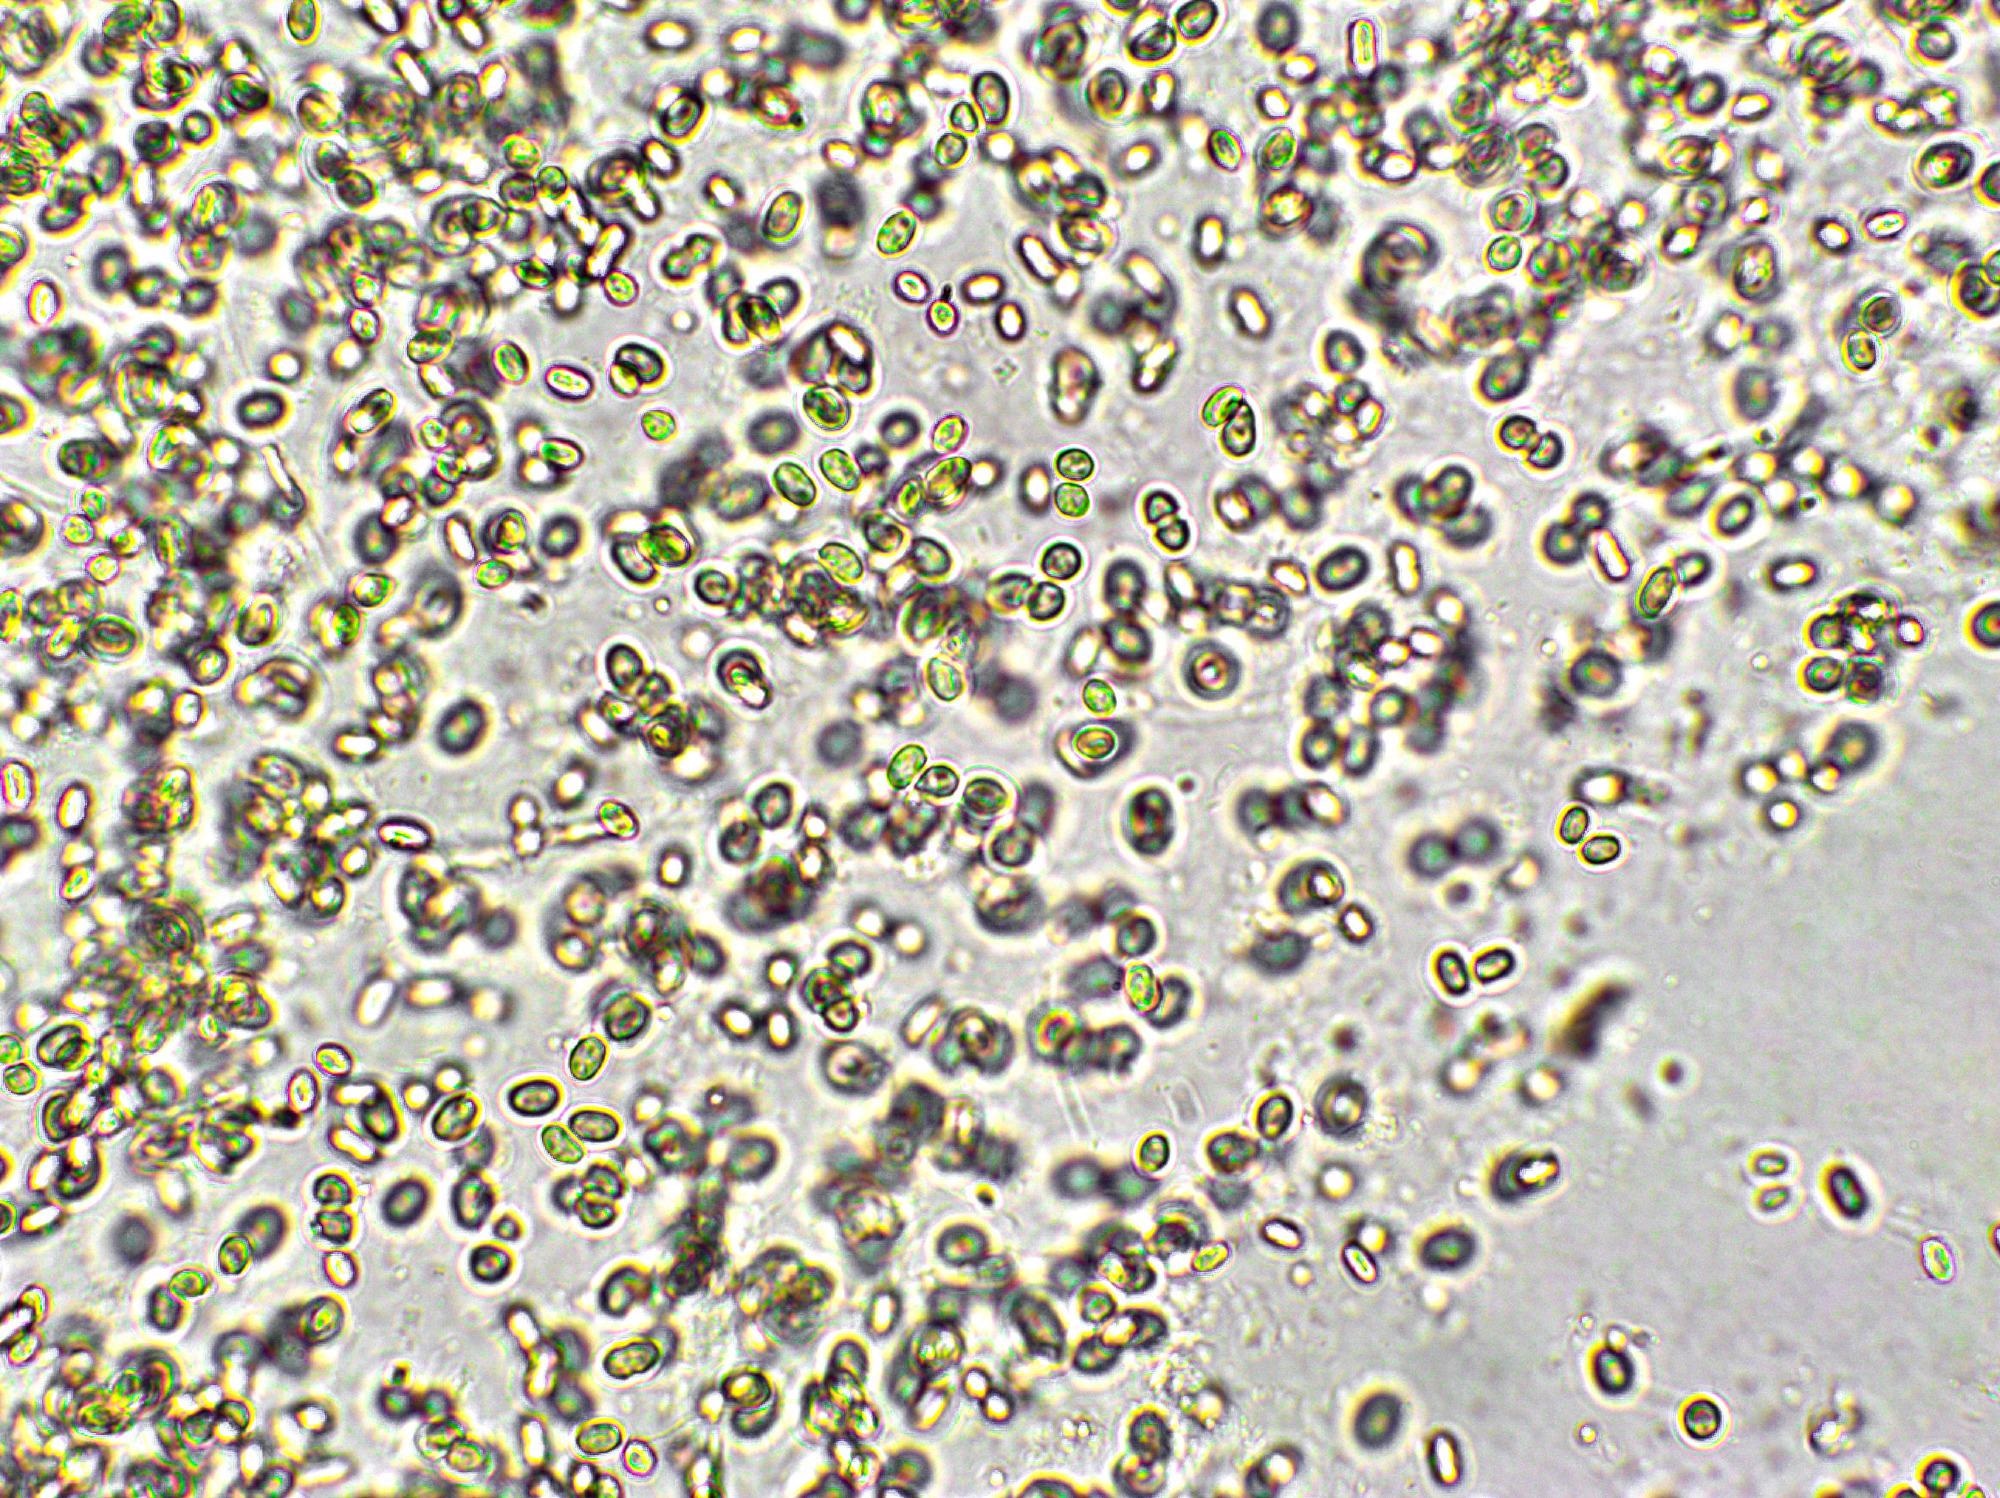 Study: Chlorella vulgaris algae under microscopic view Image Credit: Elif Bayraktar / Shutterstock